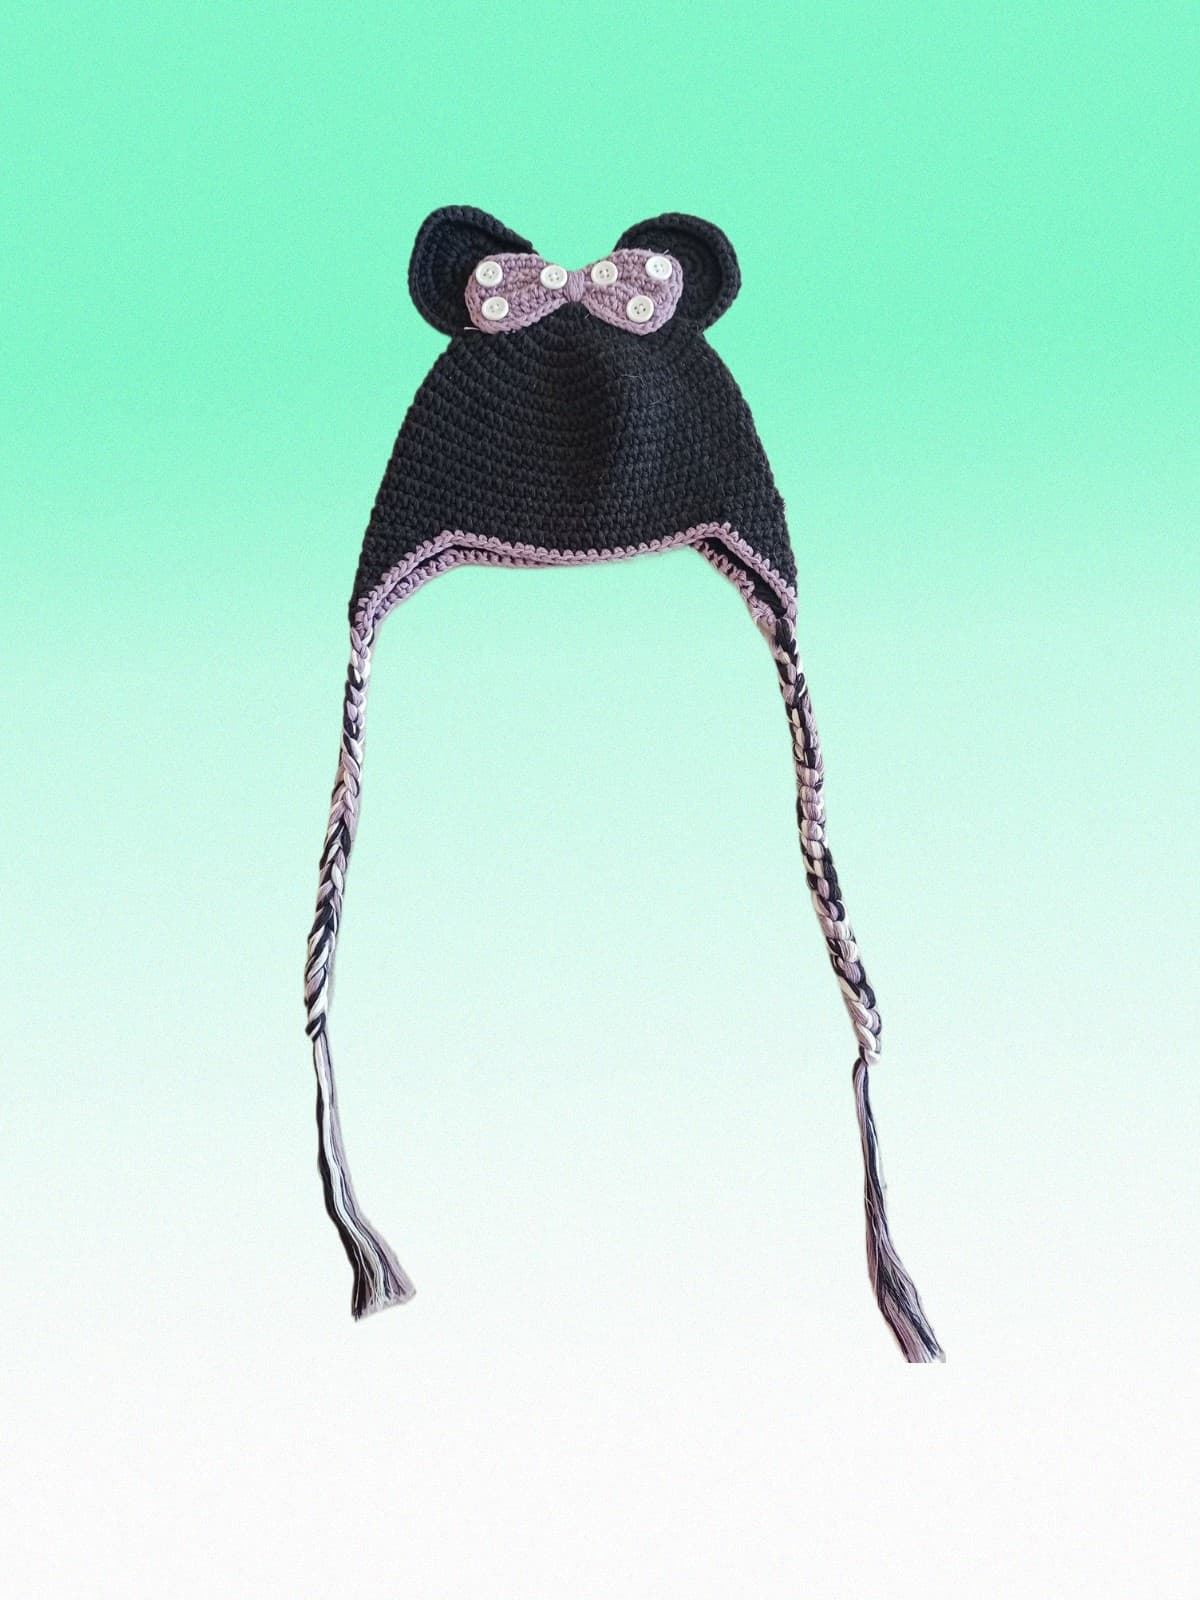 Gorro Minnie negro y lila - Imagen 1